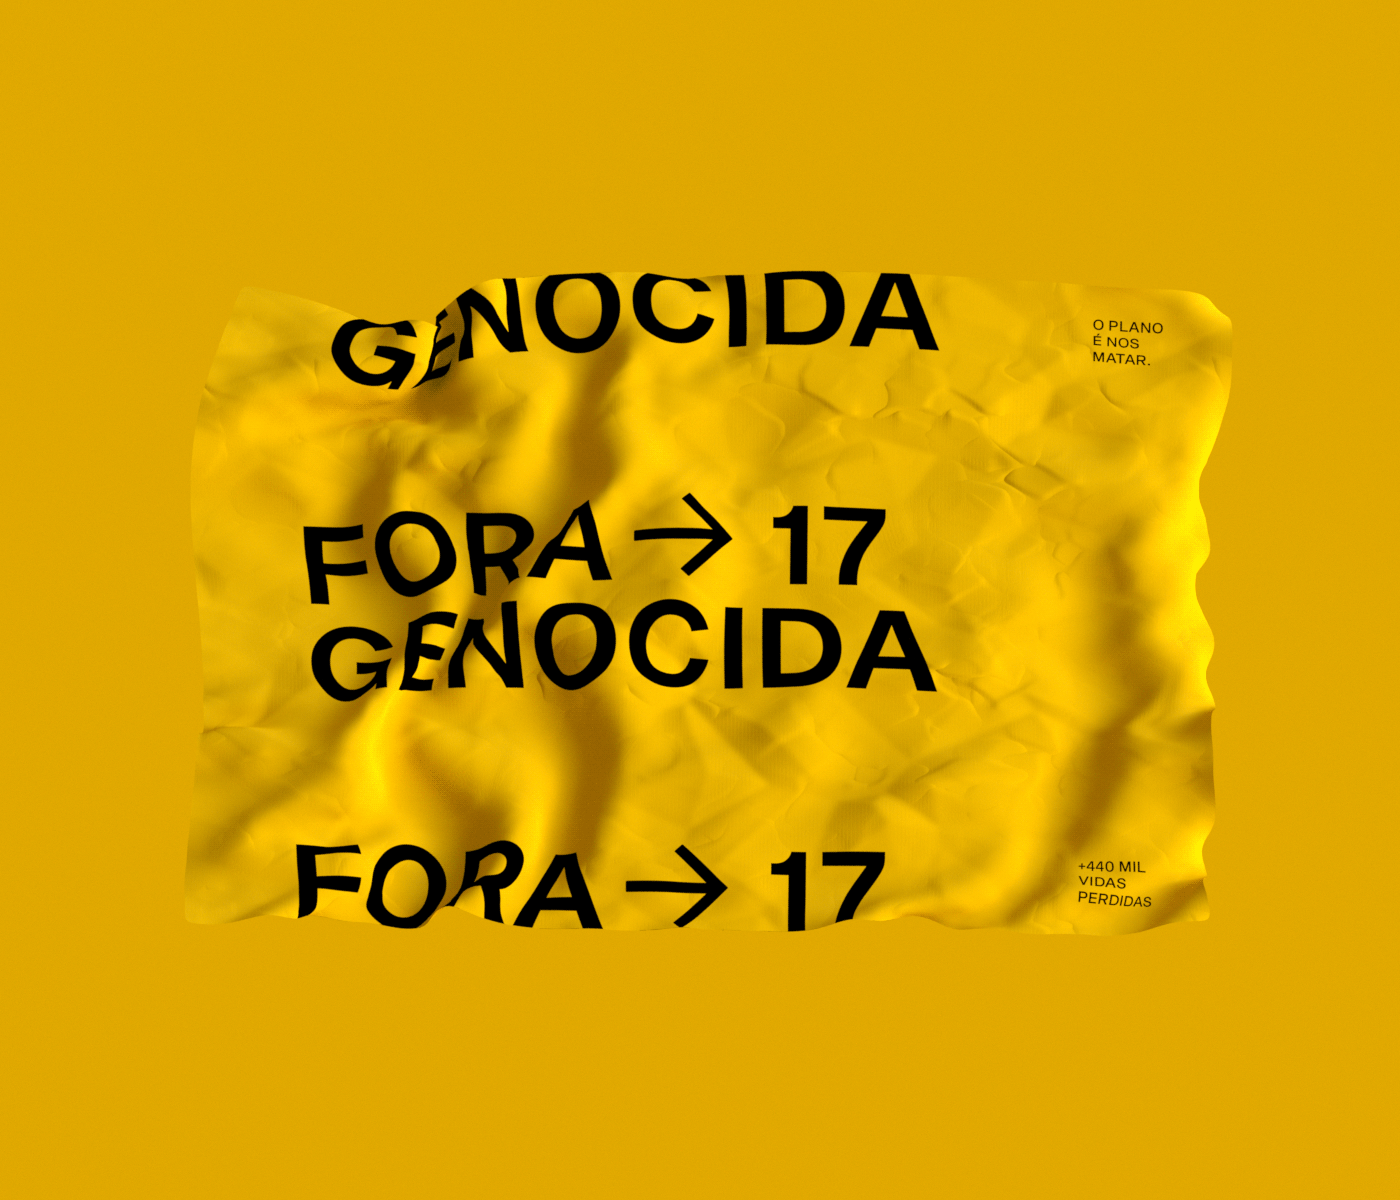 abstract art direction  Brasil cinema 4d design gráfico Digital Art  graphic design  modernism posters stickers